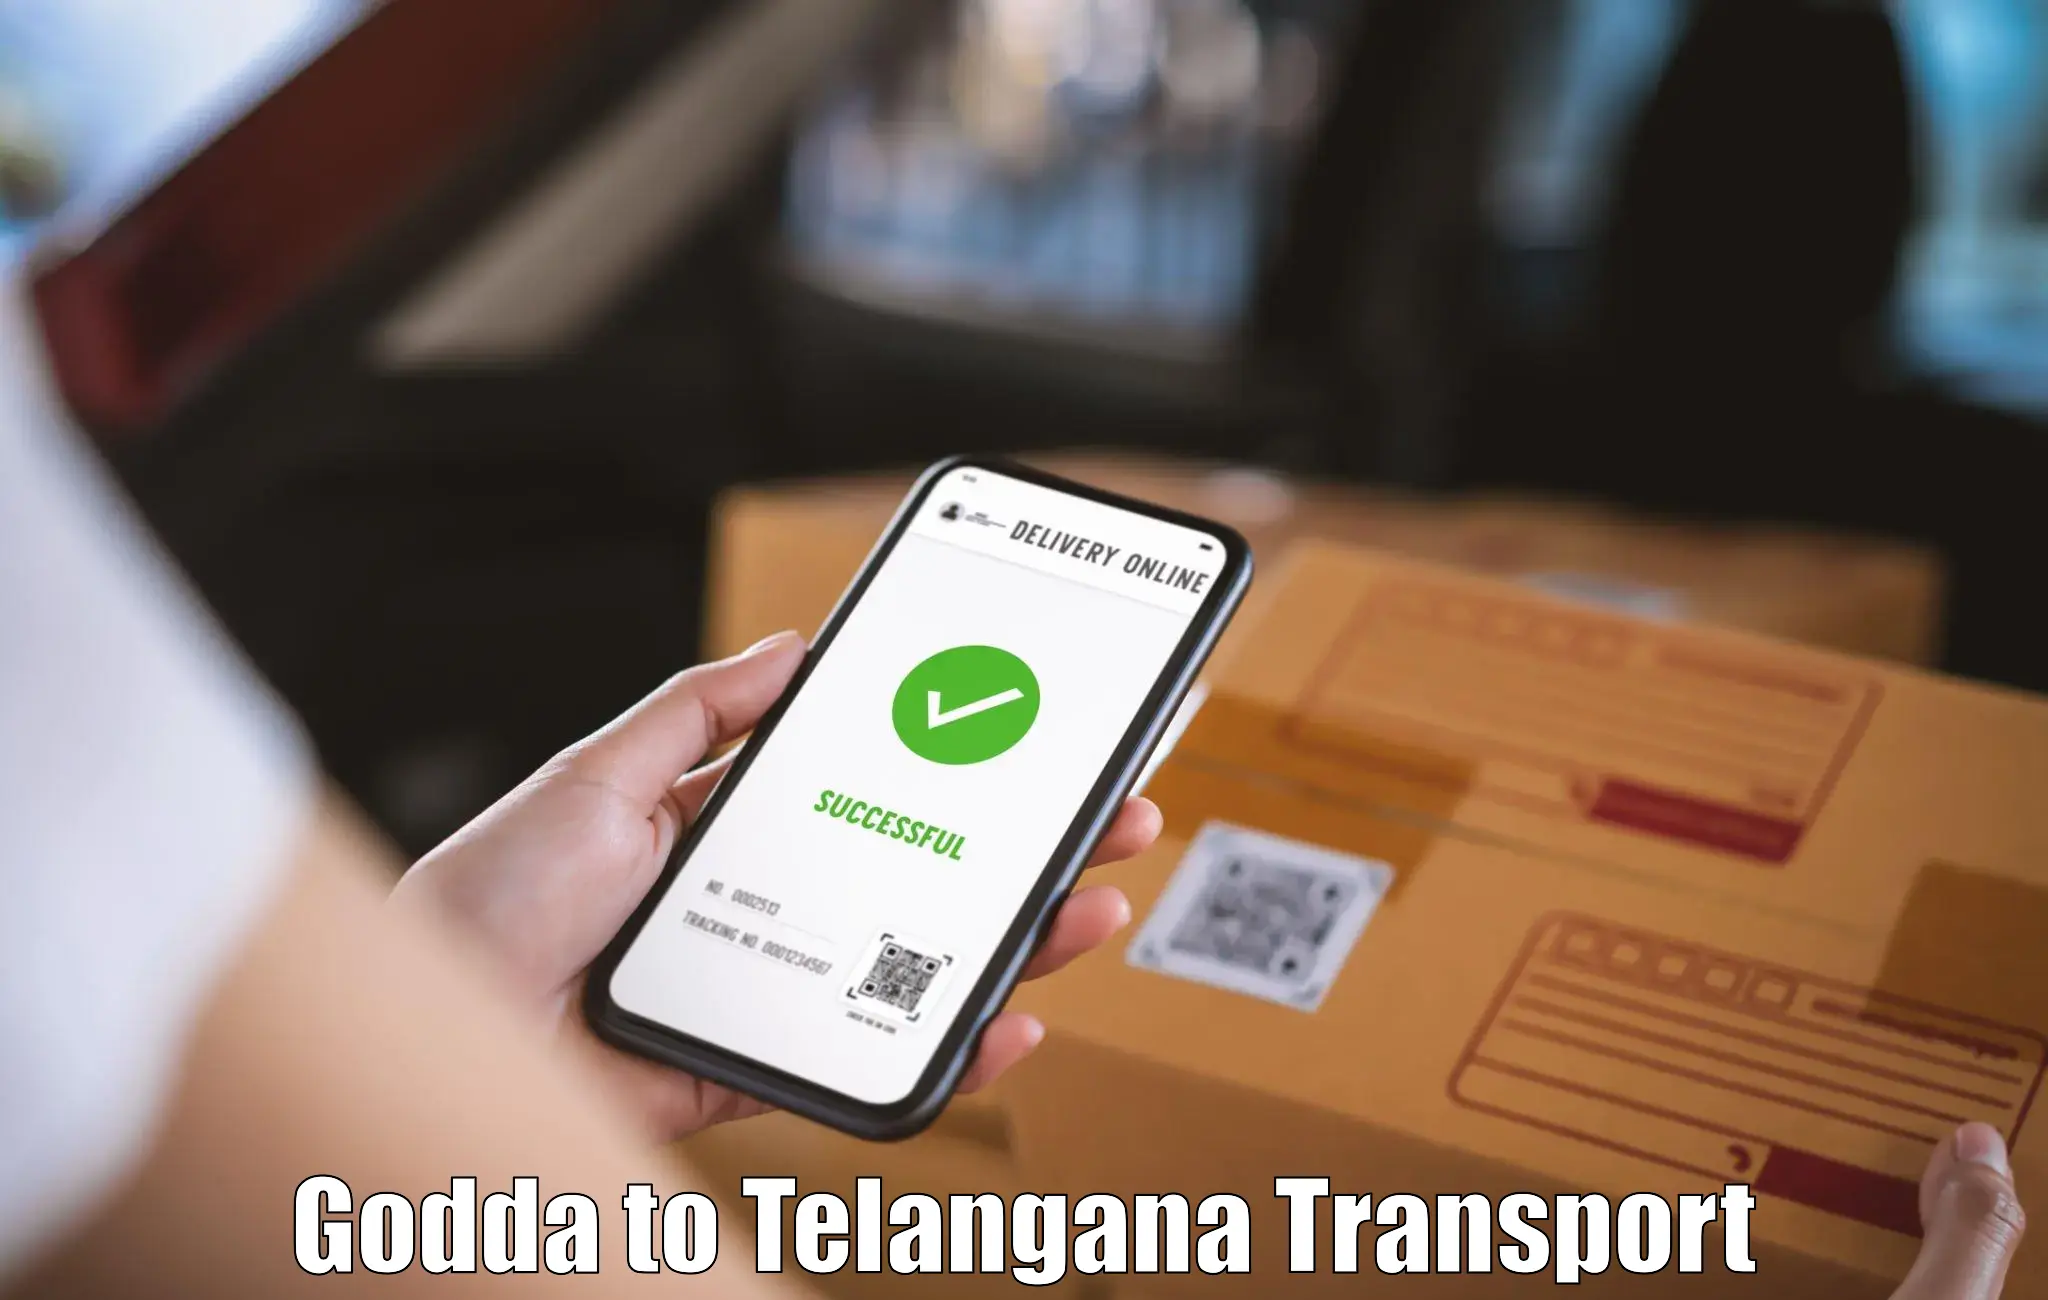 Online transport service Godda to Medak